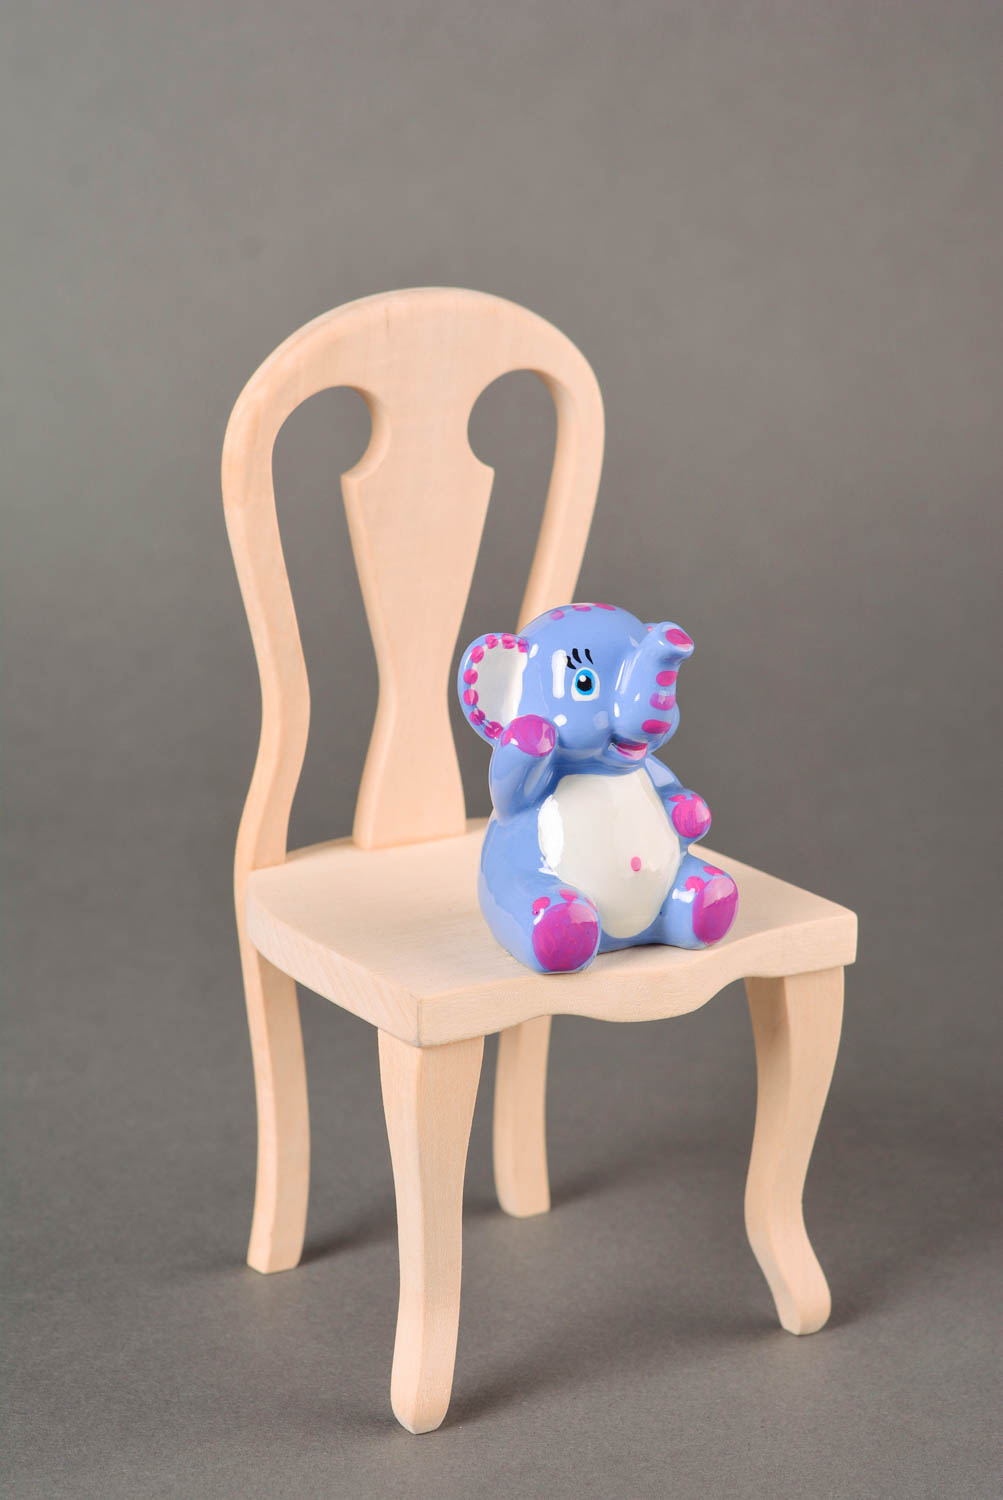 Handmade plaster statuette designer home decor gift for kid decorative use only photo 1